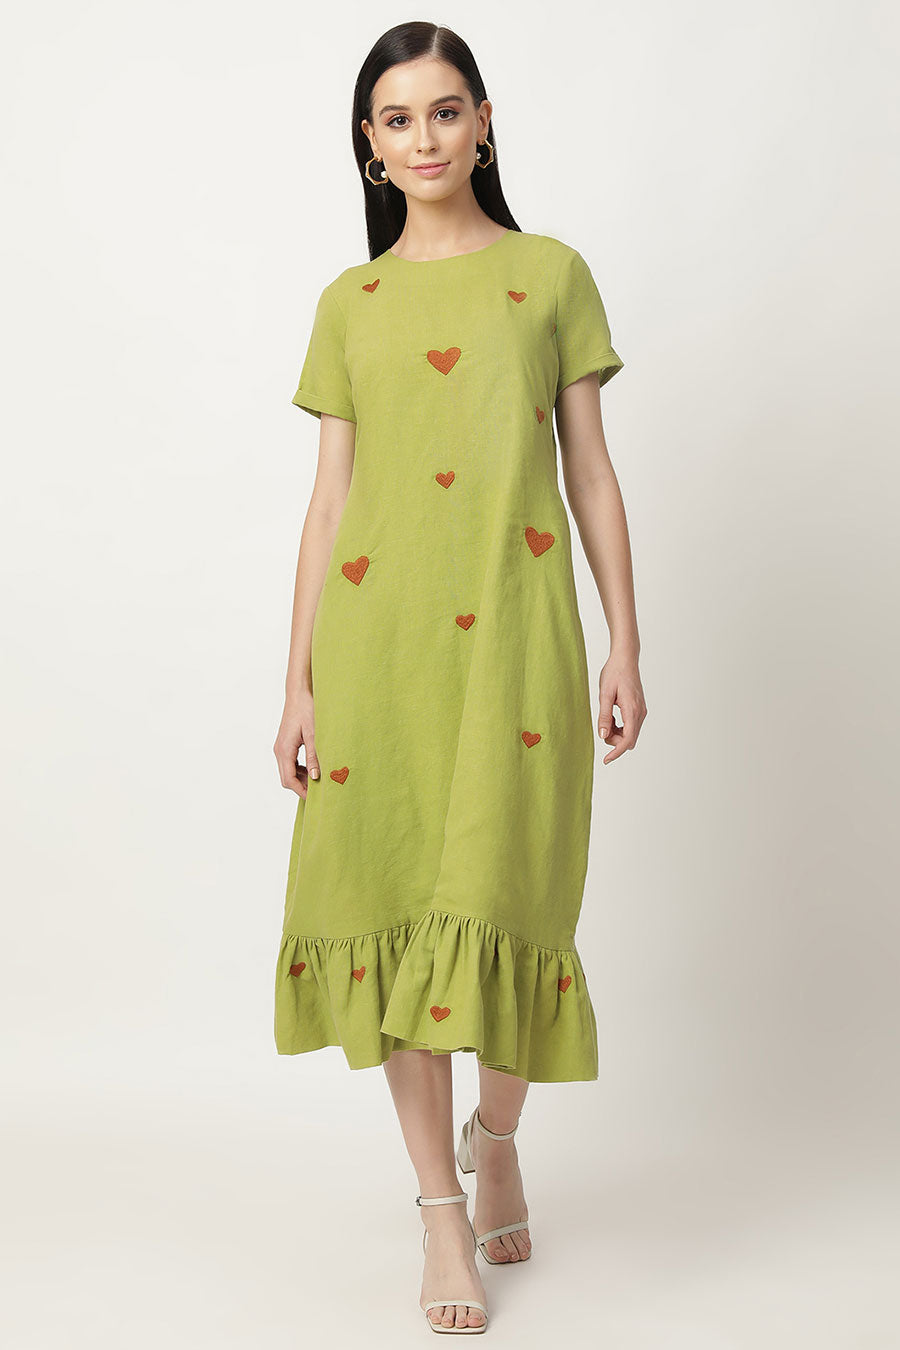 Litzy Green Embroidered Midi Dress